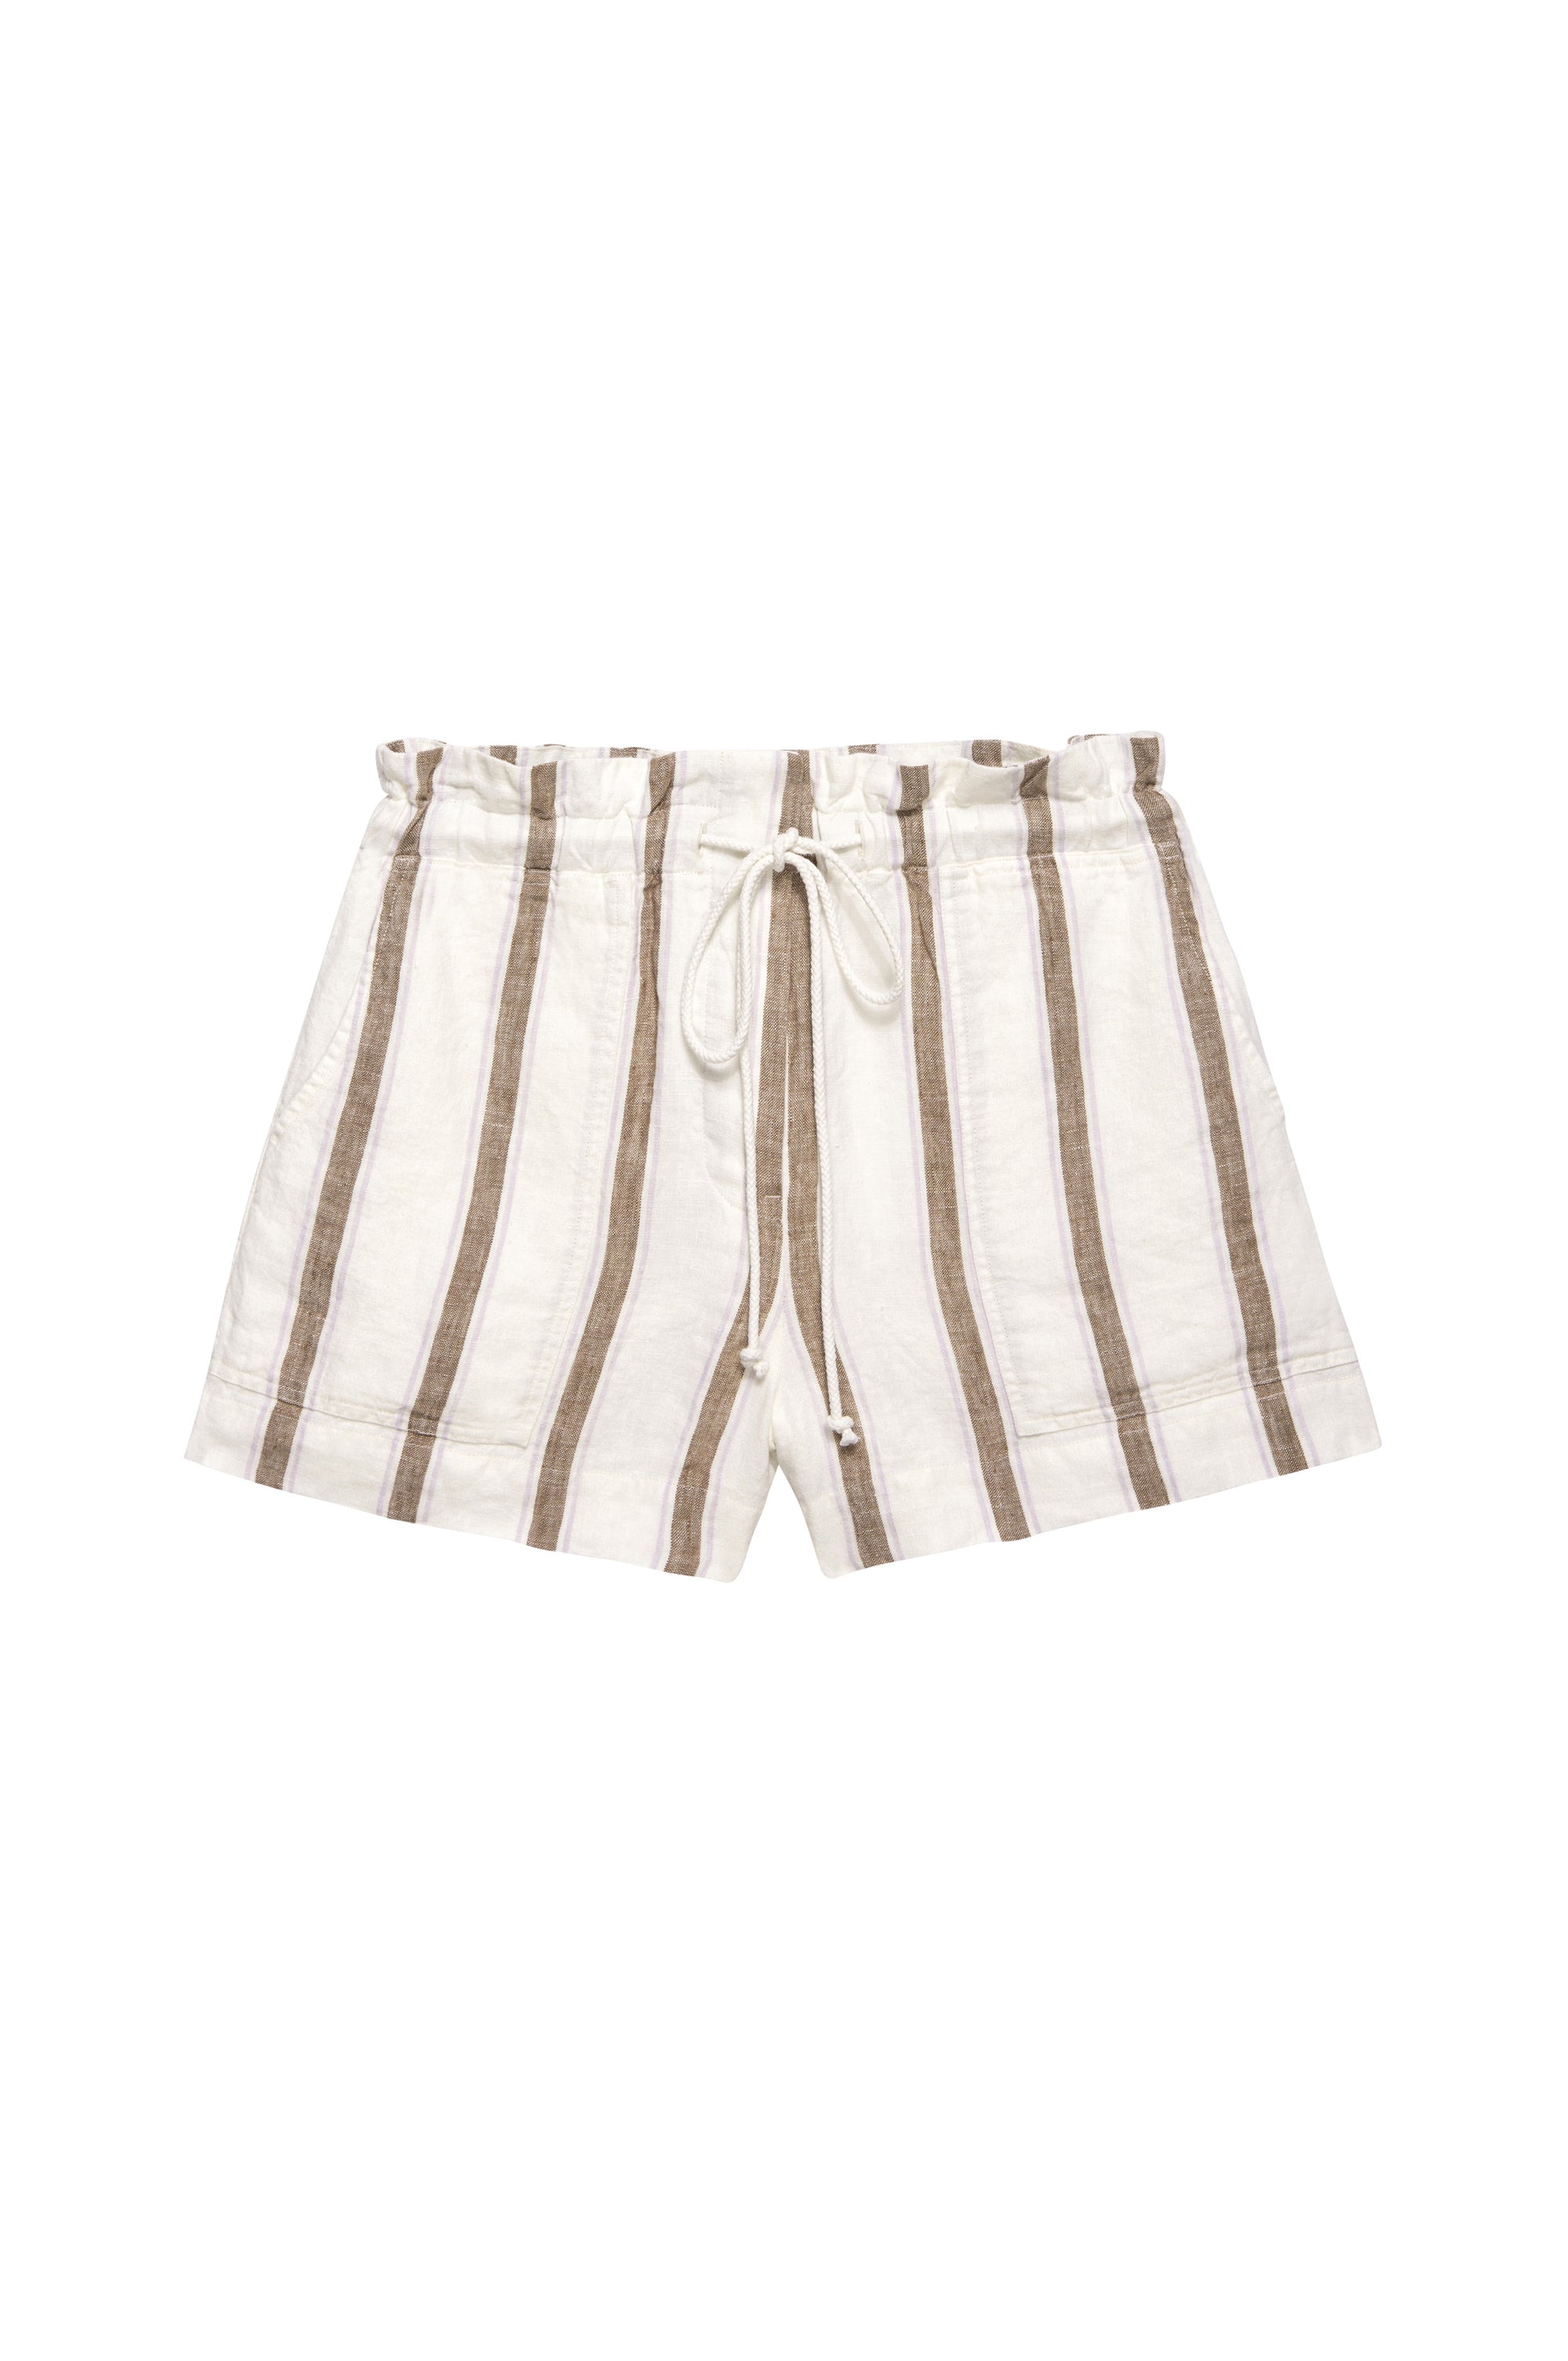 Foster Shorts - Coconut Stripe